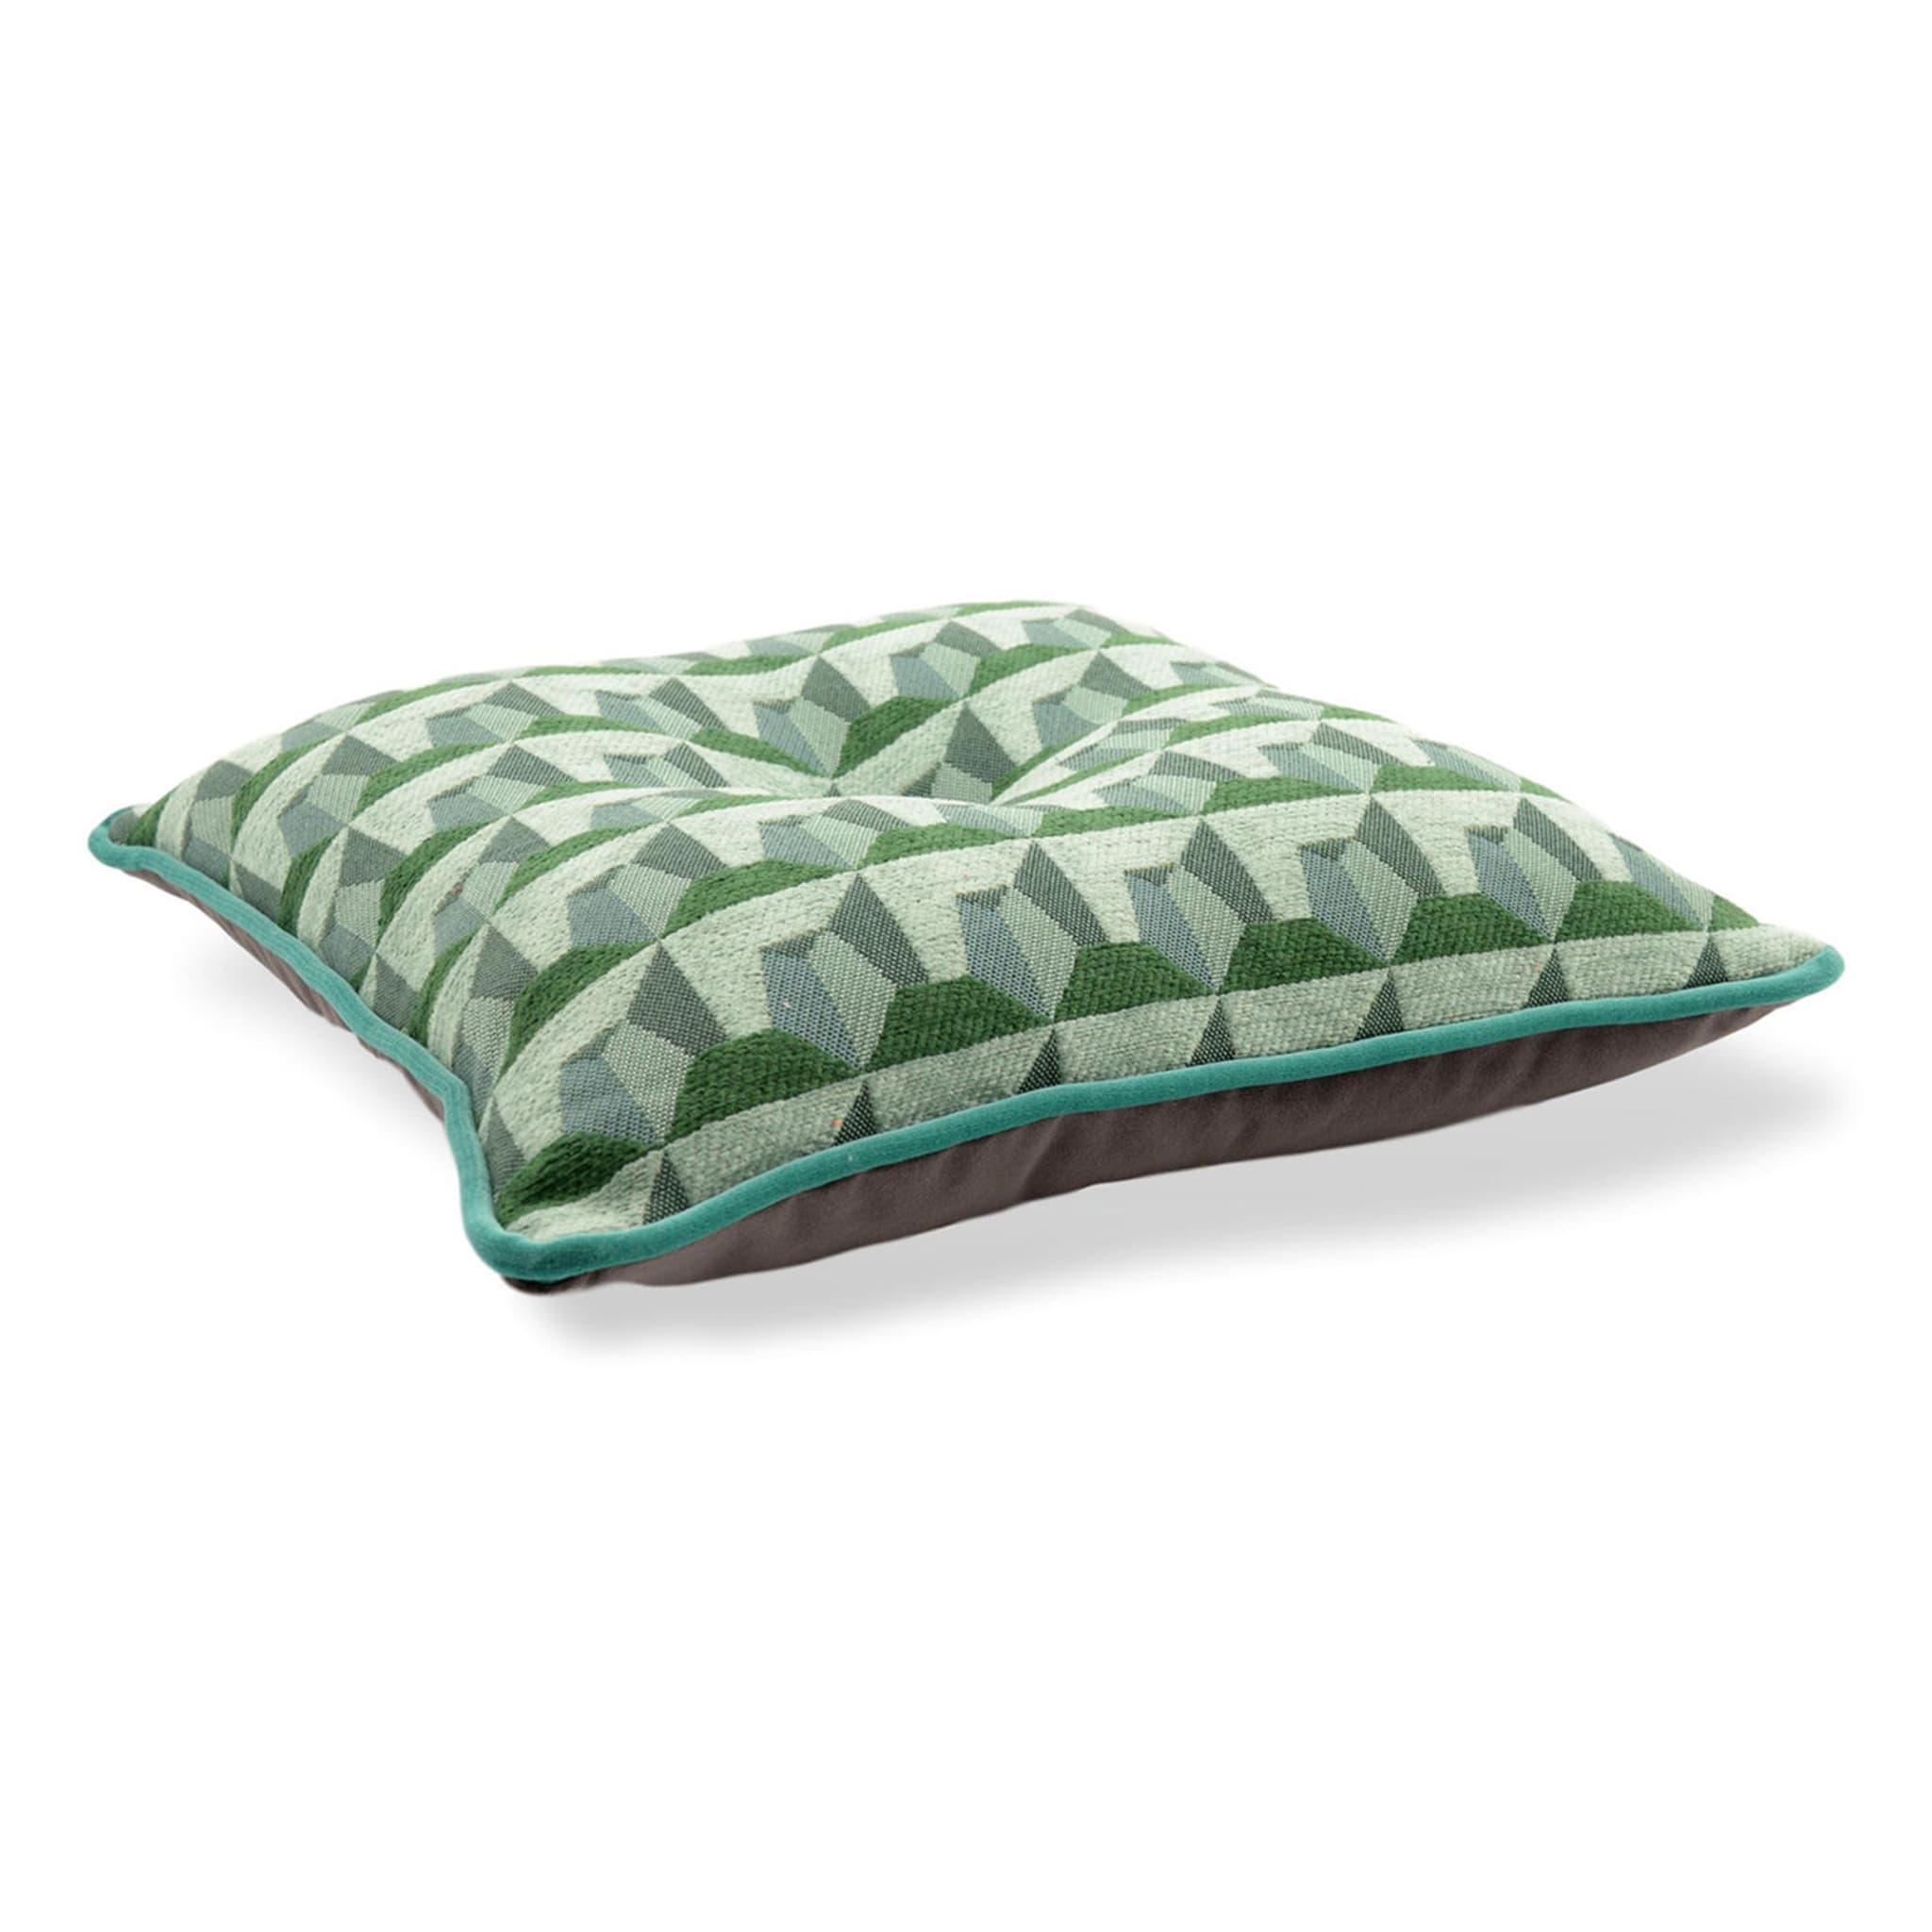 Green Carrè Cushion in geometric jacquard fabric - Alternative view 1